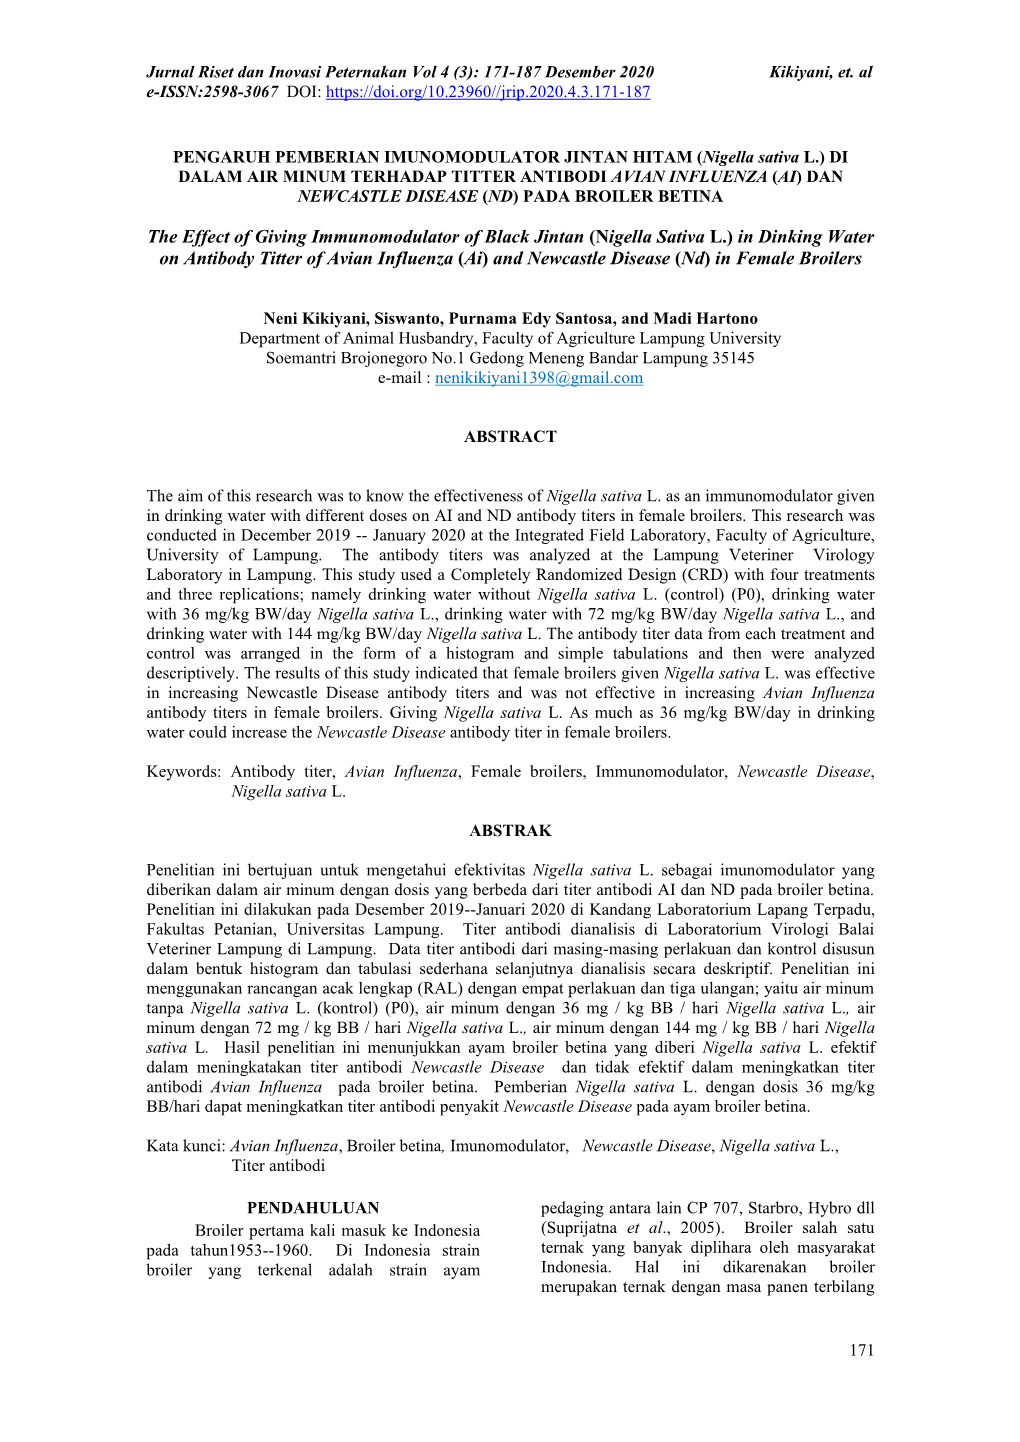 The Effect of Giving Immunomodulator of Black Jintan (Nigella Sativa L.) in Dinking Water on Antibody Titter of Avian Influenza